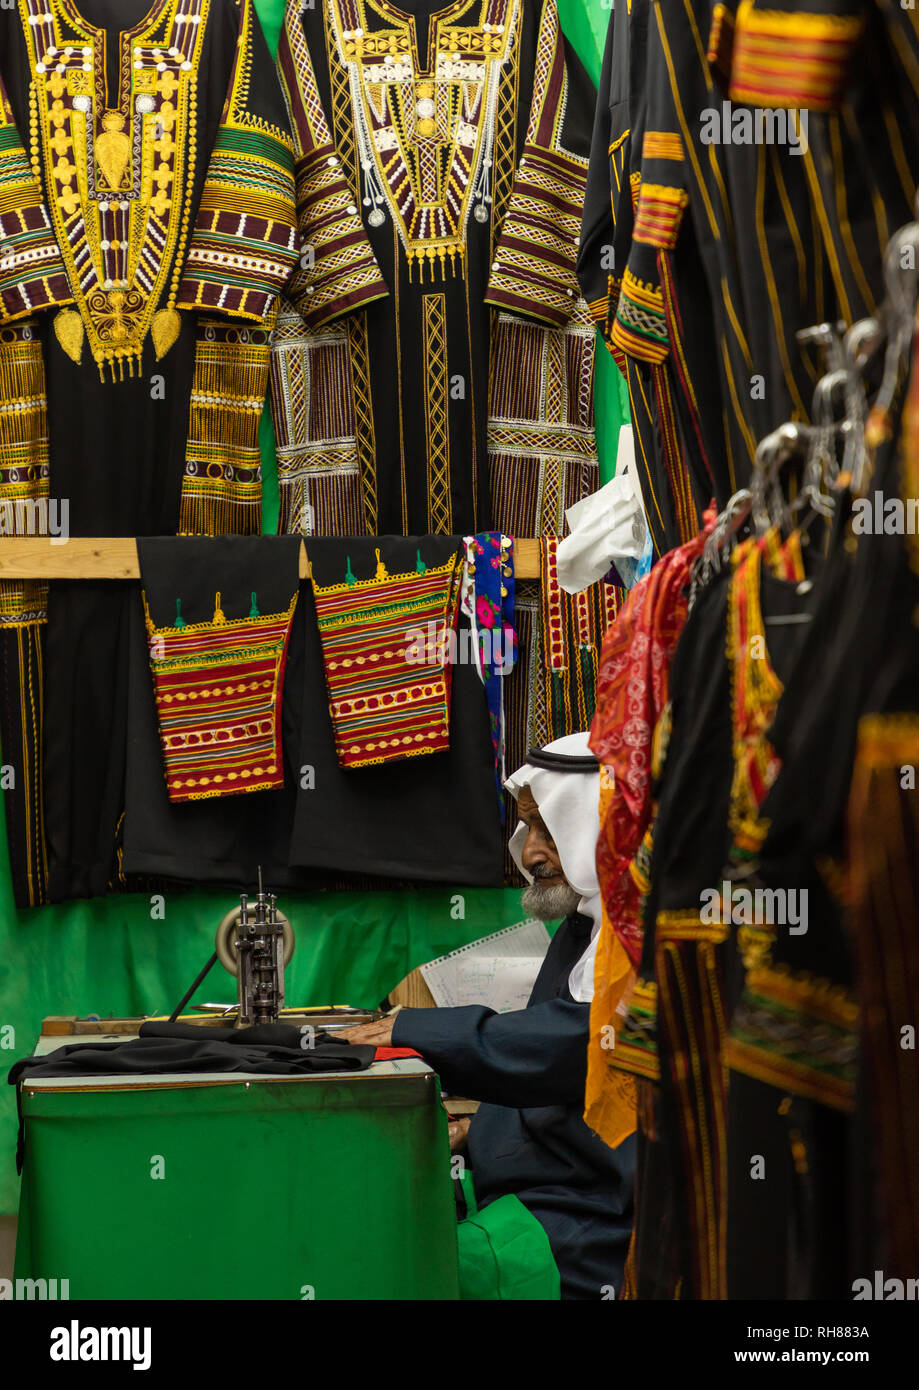 Saudi tailor using a sewing machine to make embroideries, Mecca province, Taïf, Saudi Arabia Stock Photo